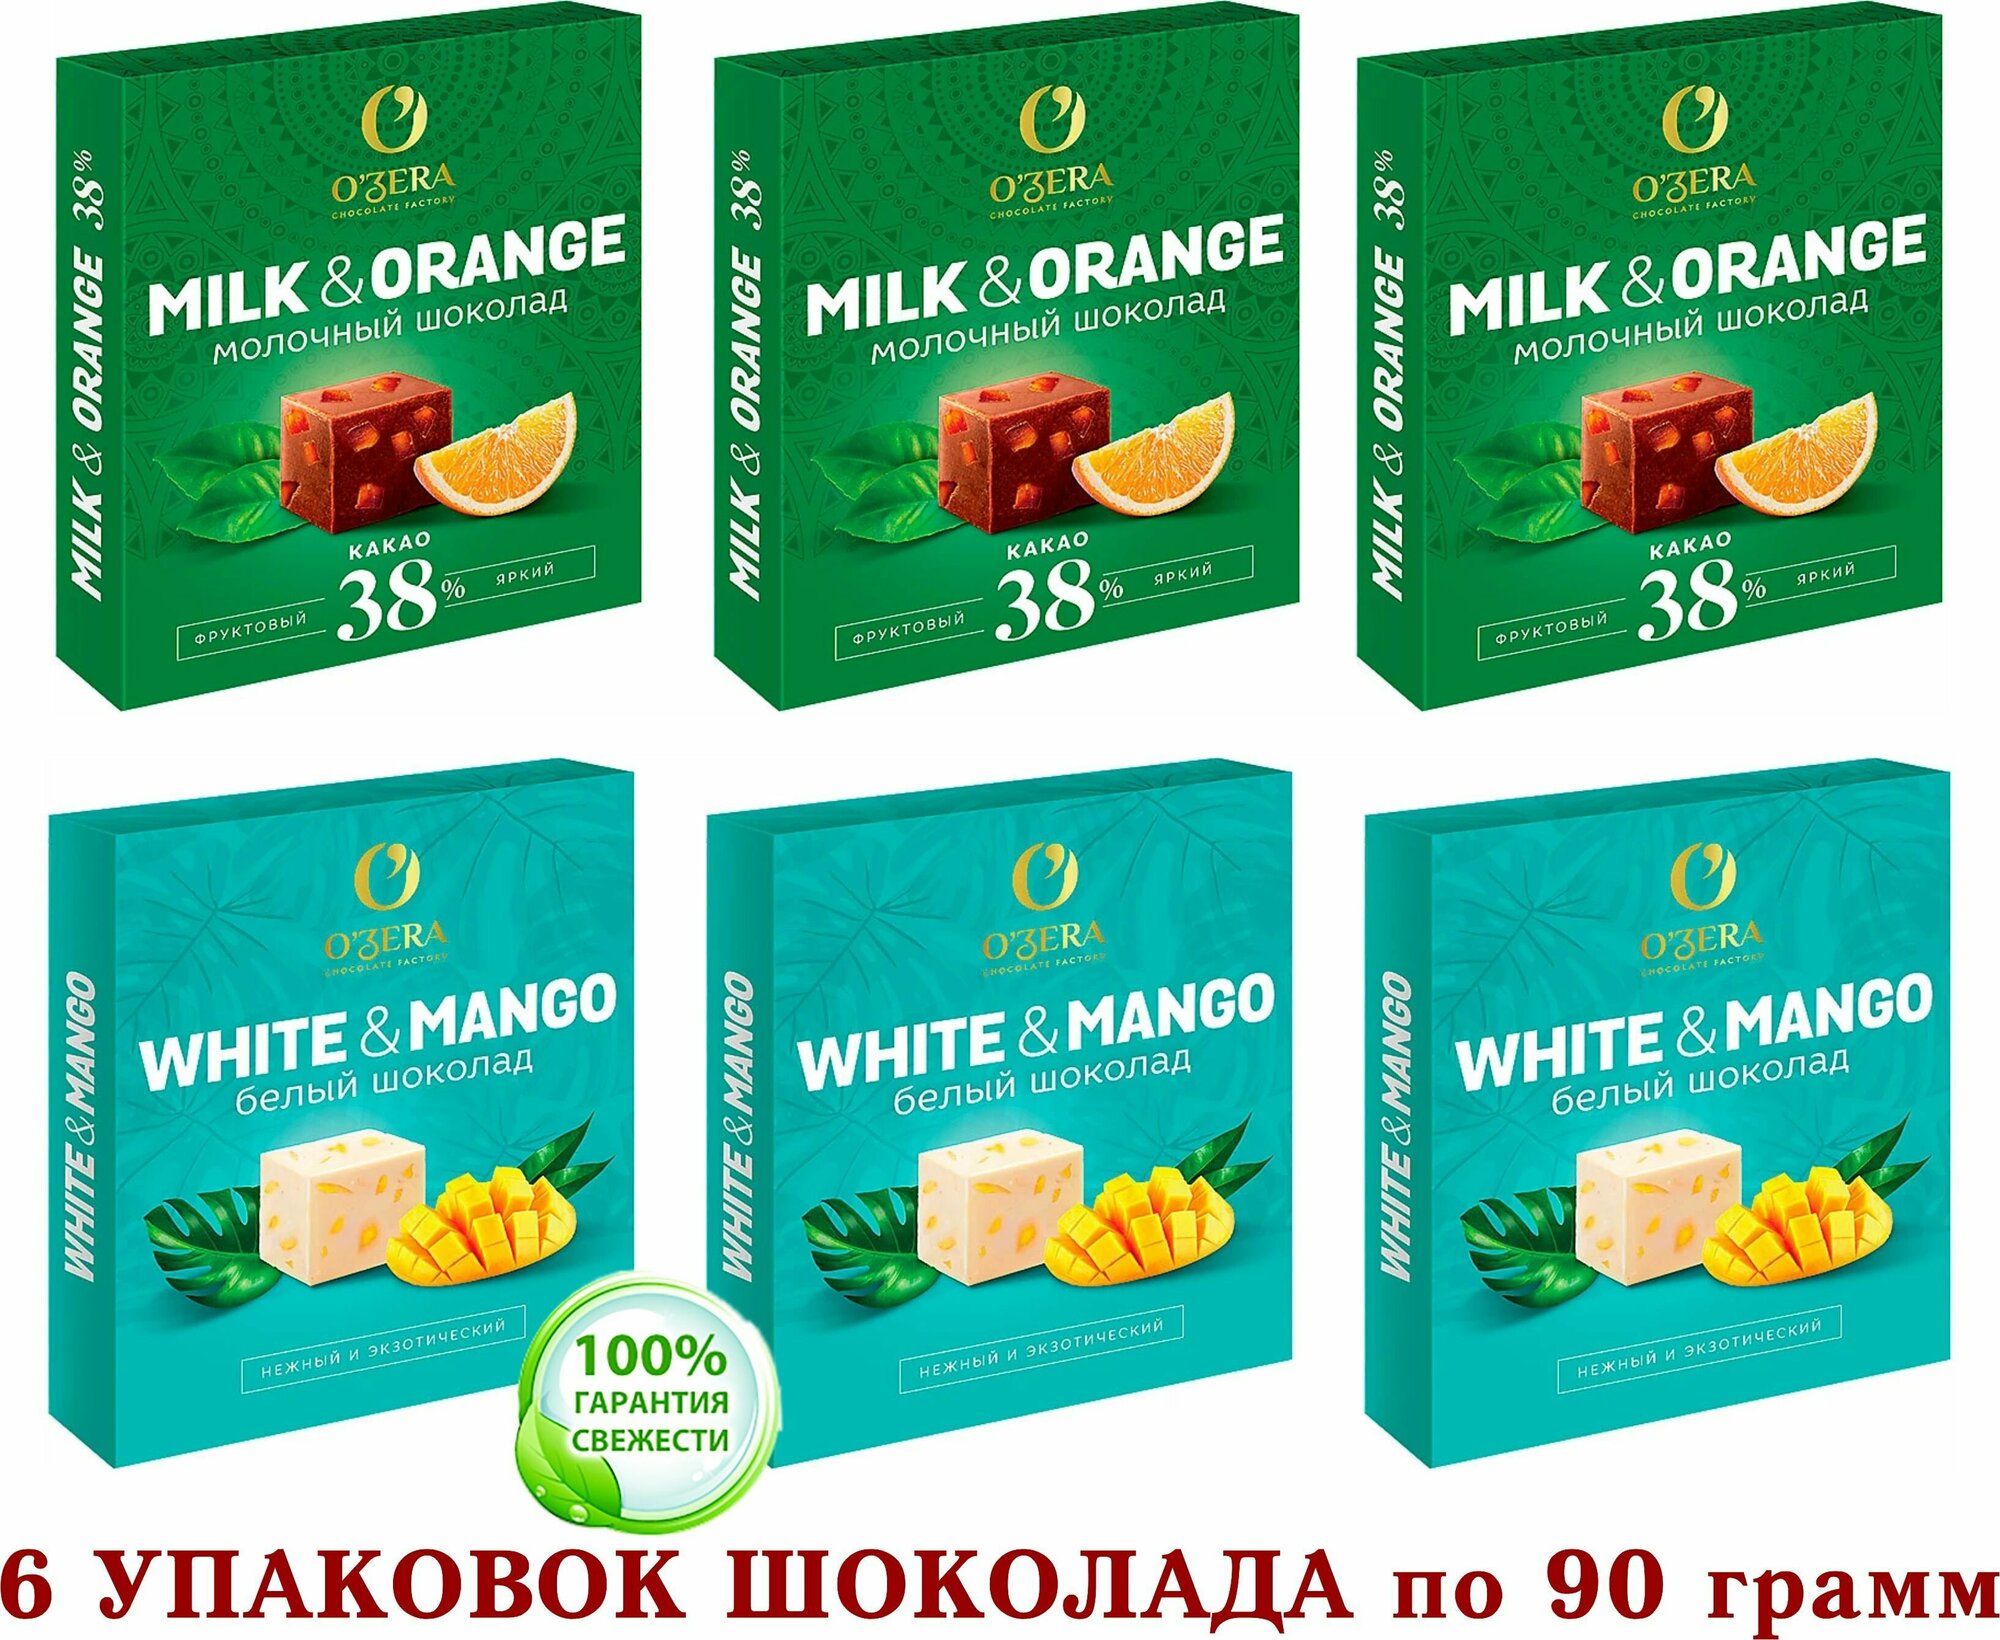 Шоколад OZERA микс белый с манго WHITE & MANGO/молочный с апельсином OZera Milk & Orange 38%-Озерский сувенир 6*90 грамм